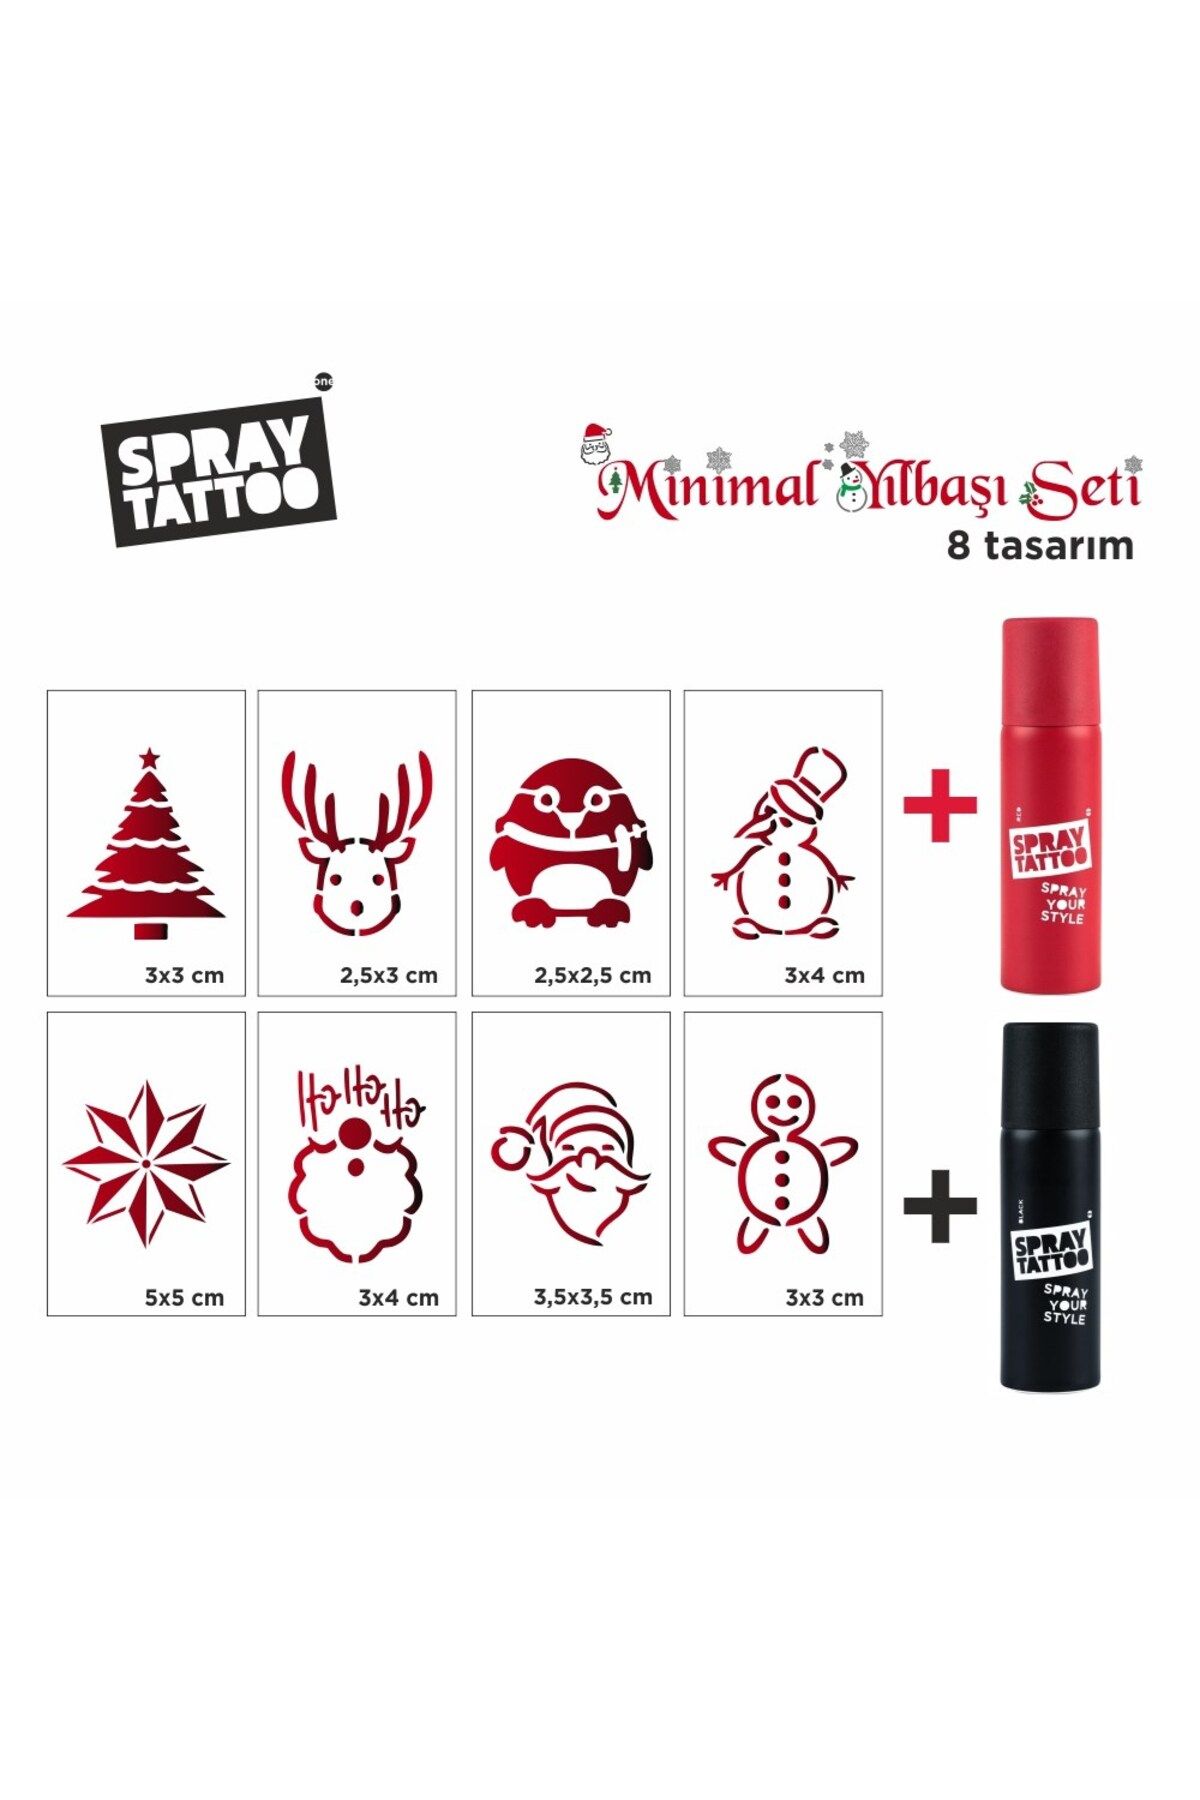 One Spray Tattoo Minimal Yılbaşı Pack Şablon + Siyah ve Kırmızı Sprey